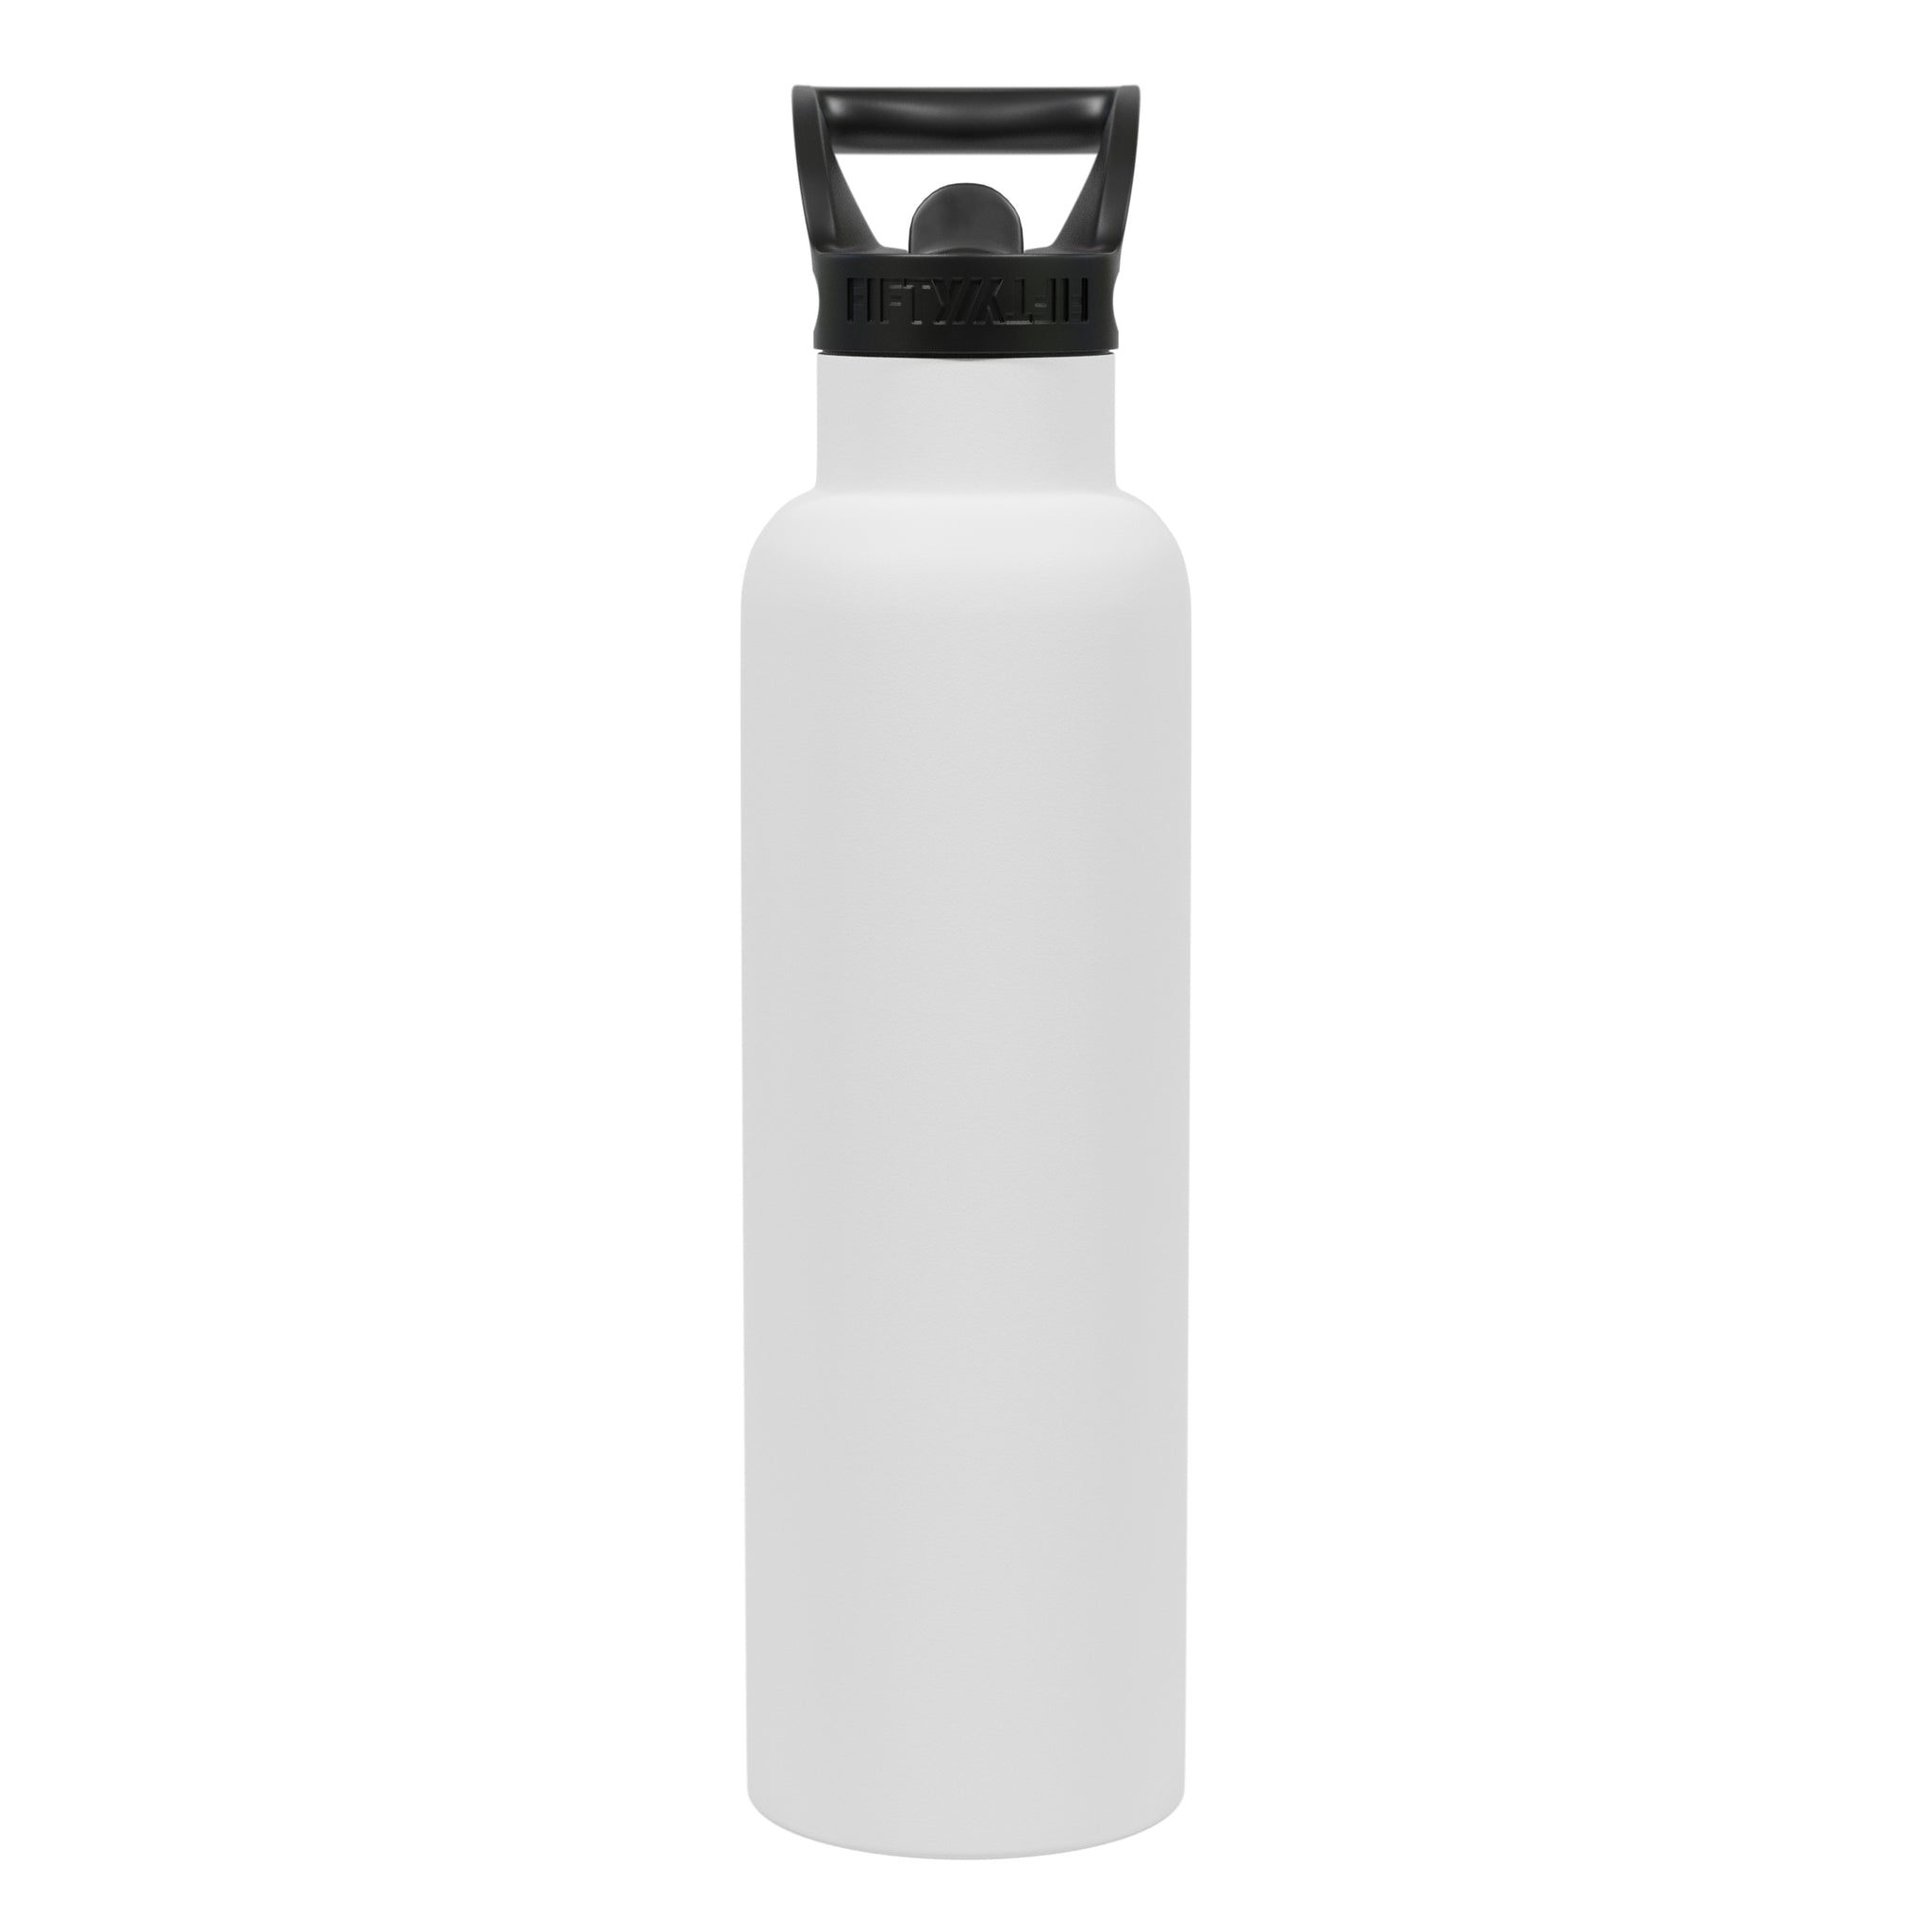 21oz Bottle w/ Standard Mouth Straw Cap– FIFTY/FIFTY Bottles